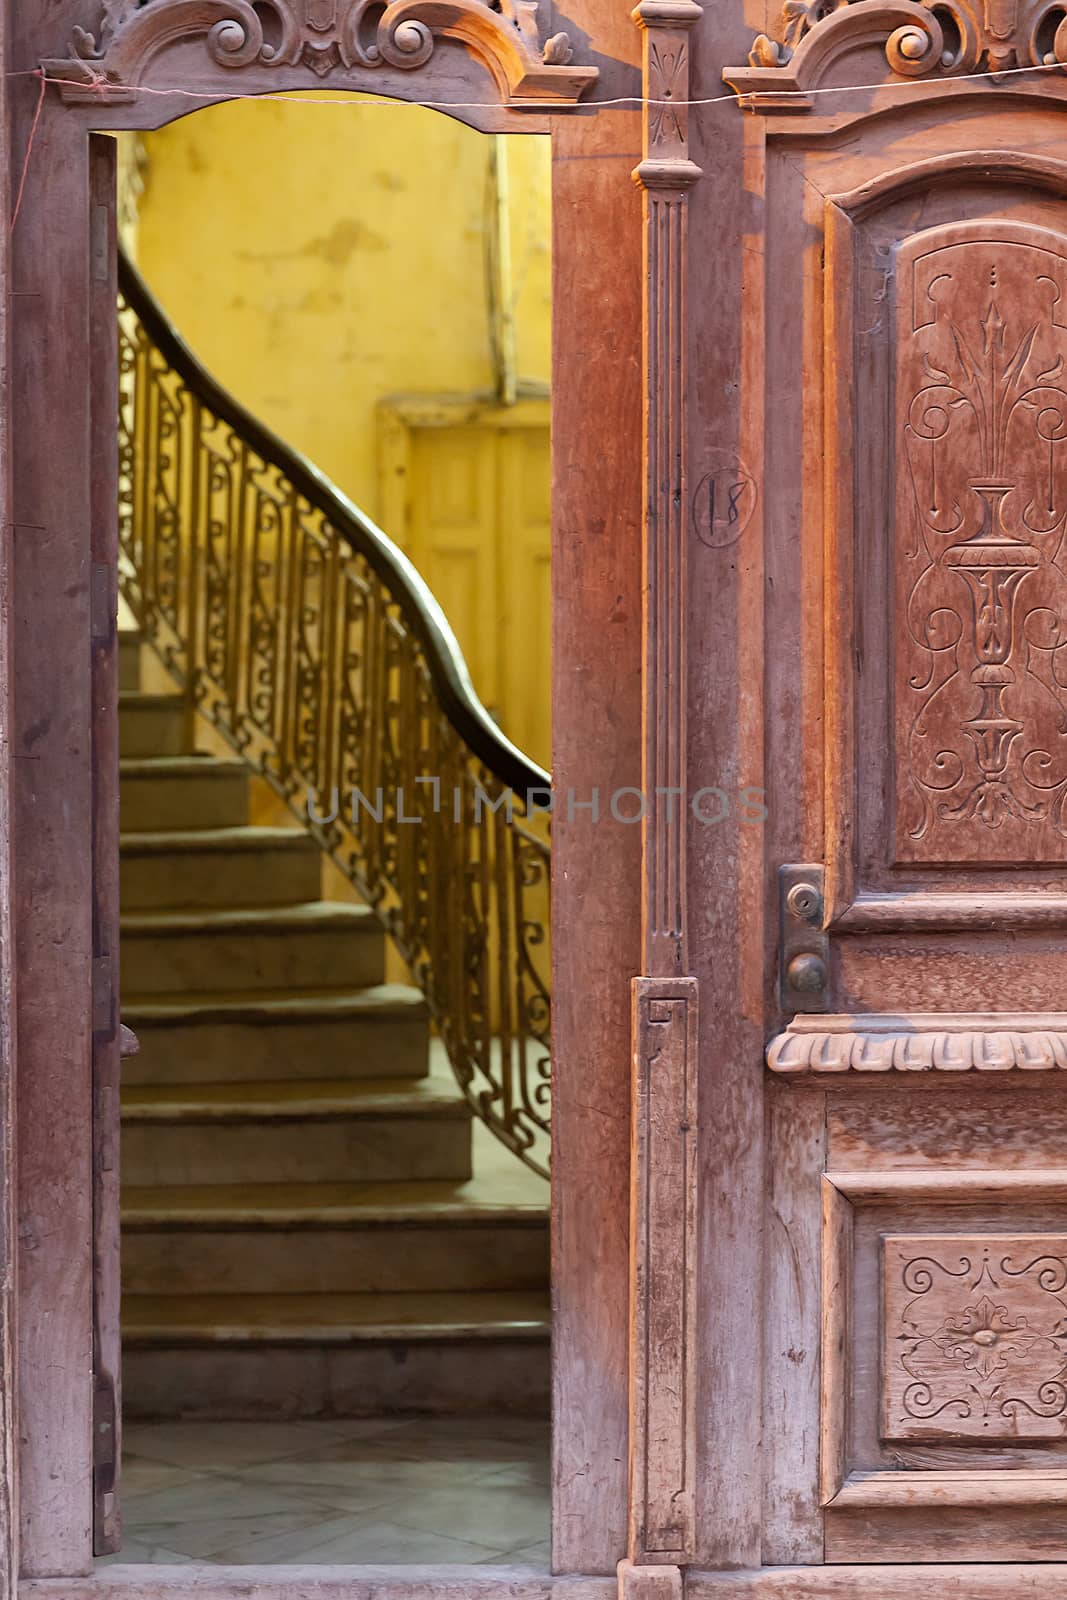 Old wooden door and staircase, Havana, Cuba by vlad-m